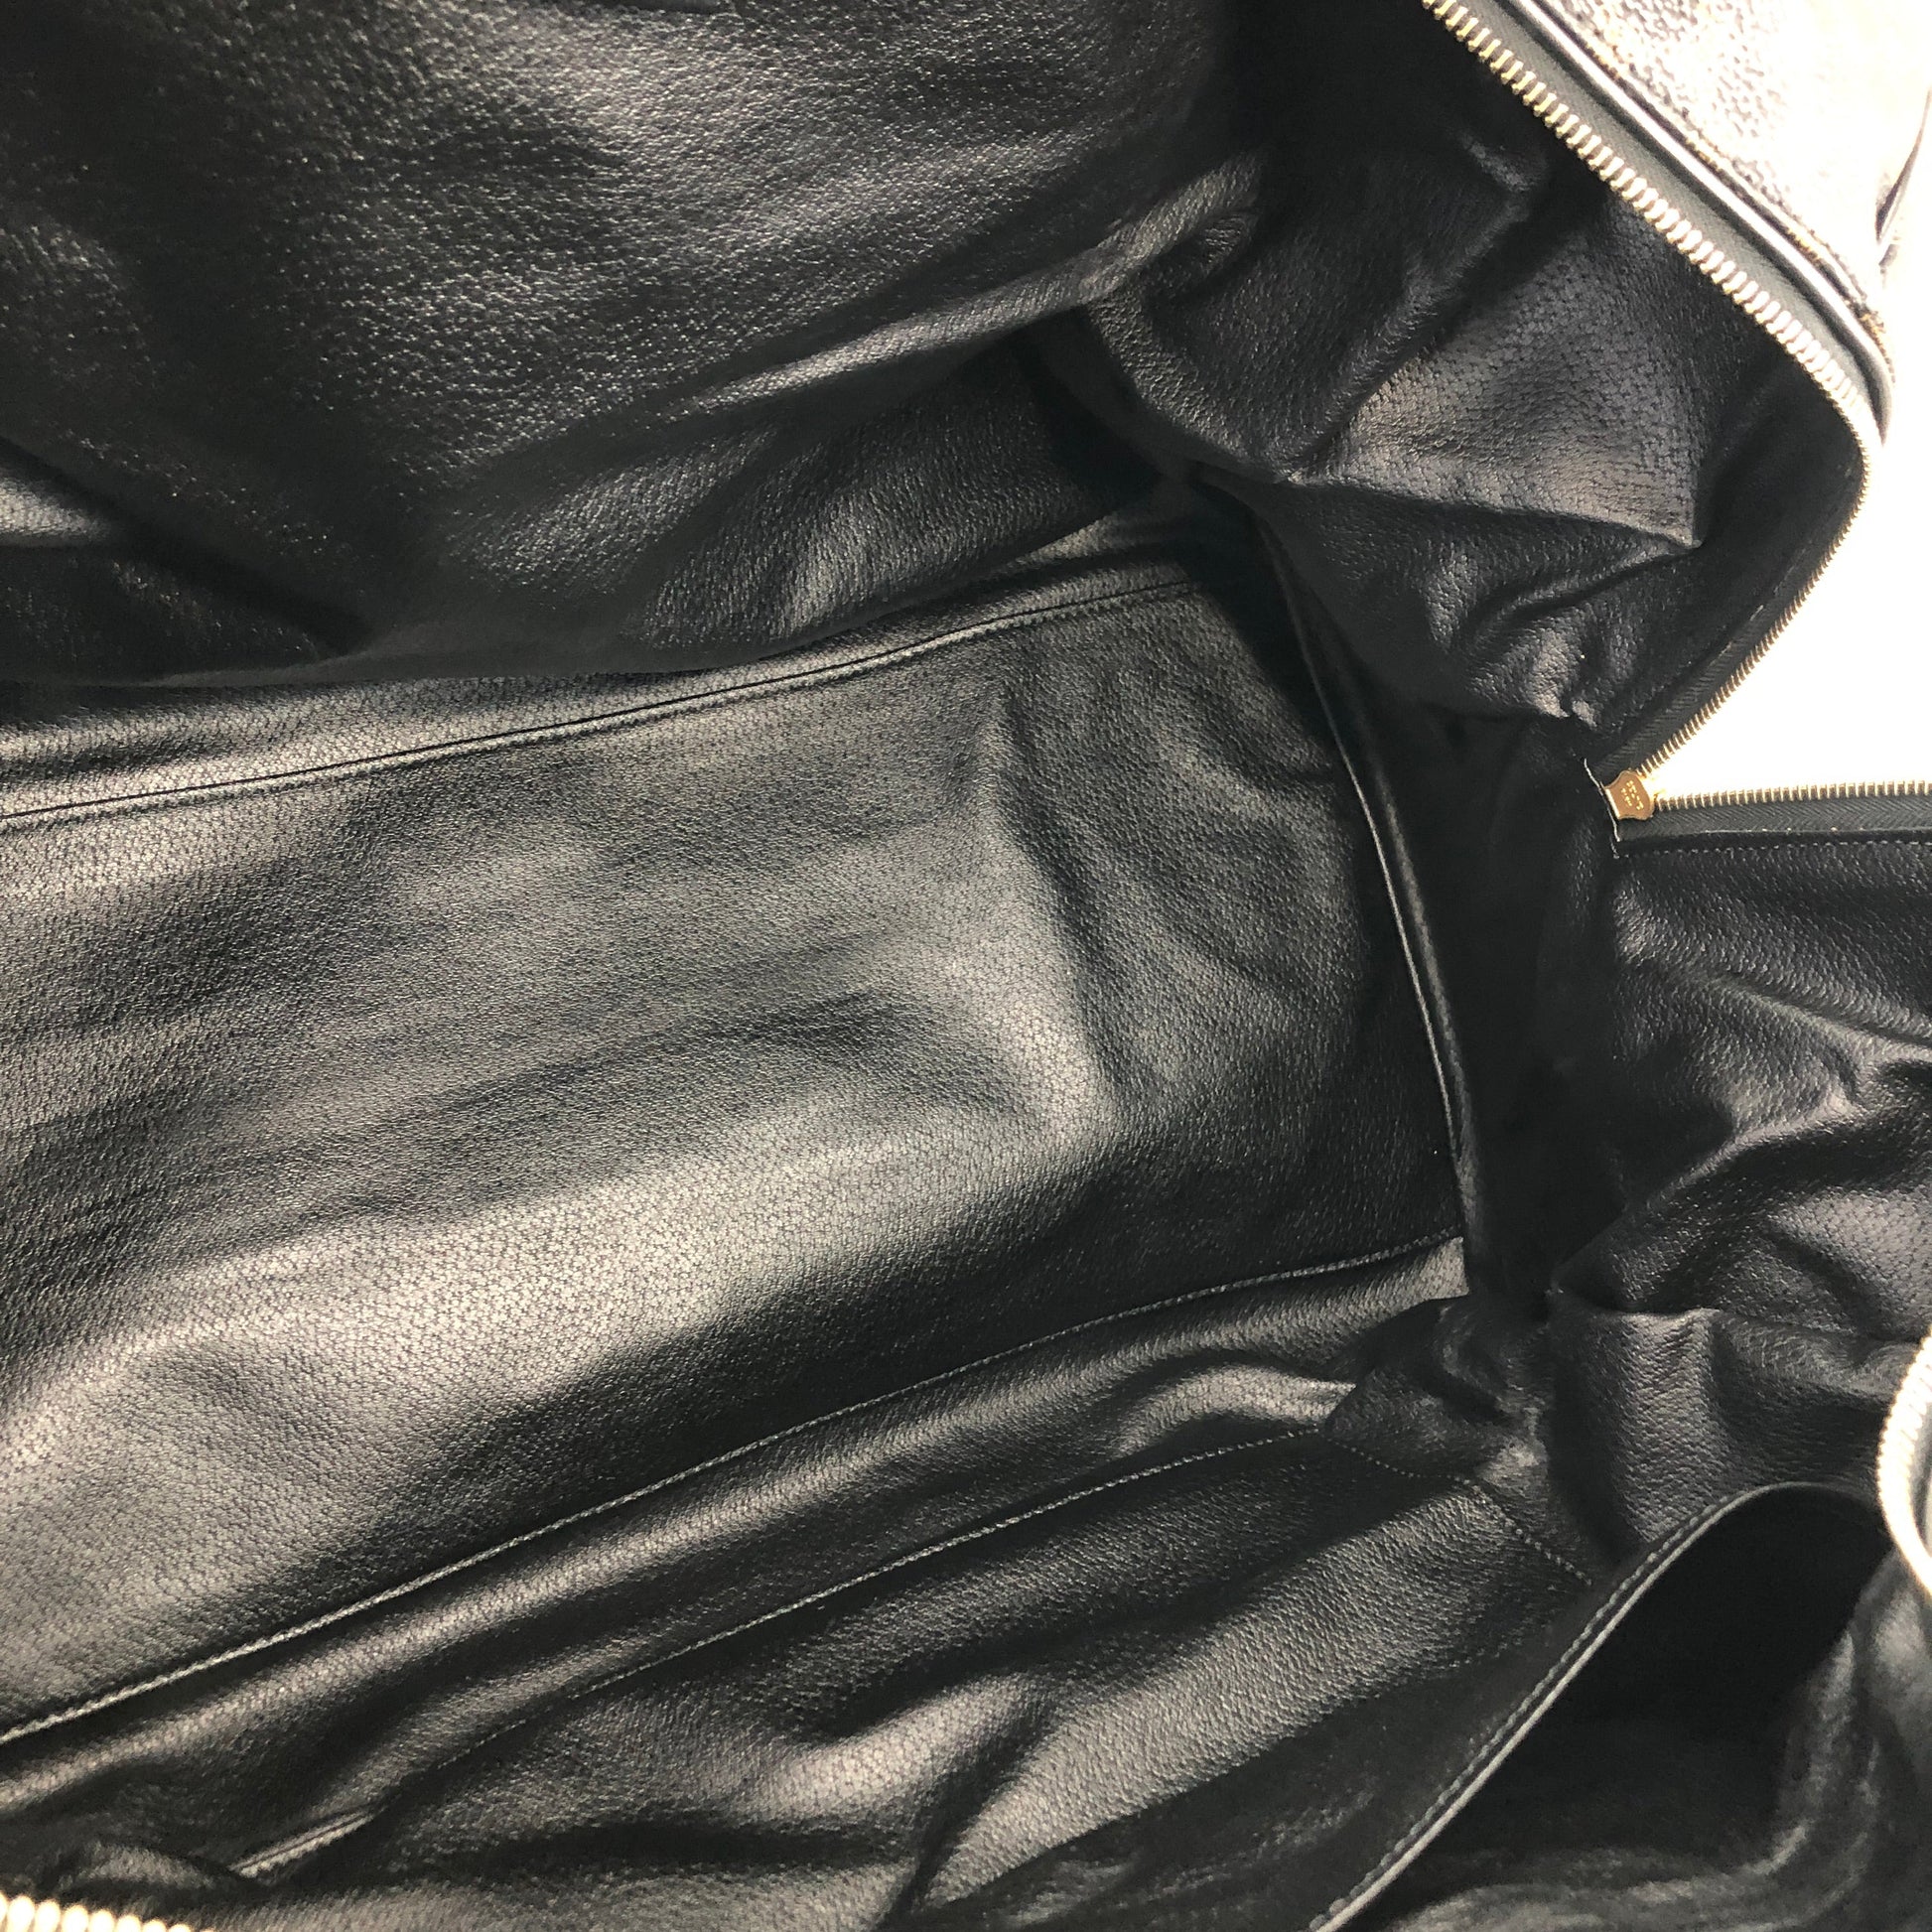 Black Celine Striped Solo Pouch Clutch Bag